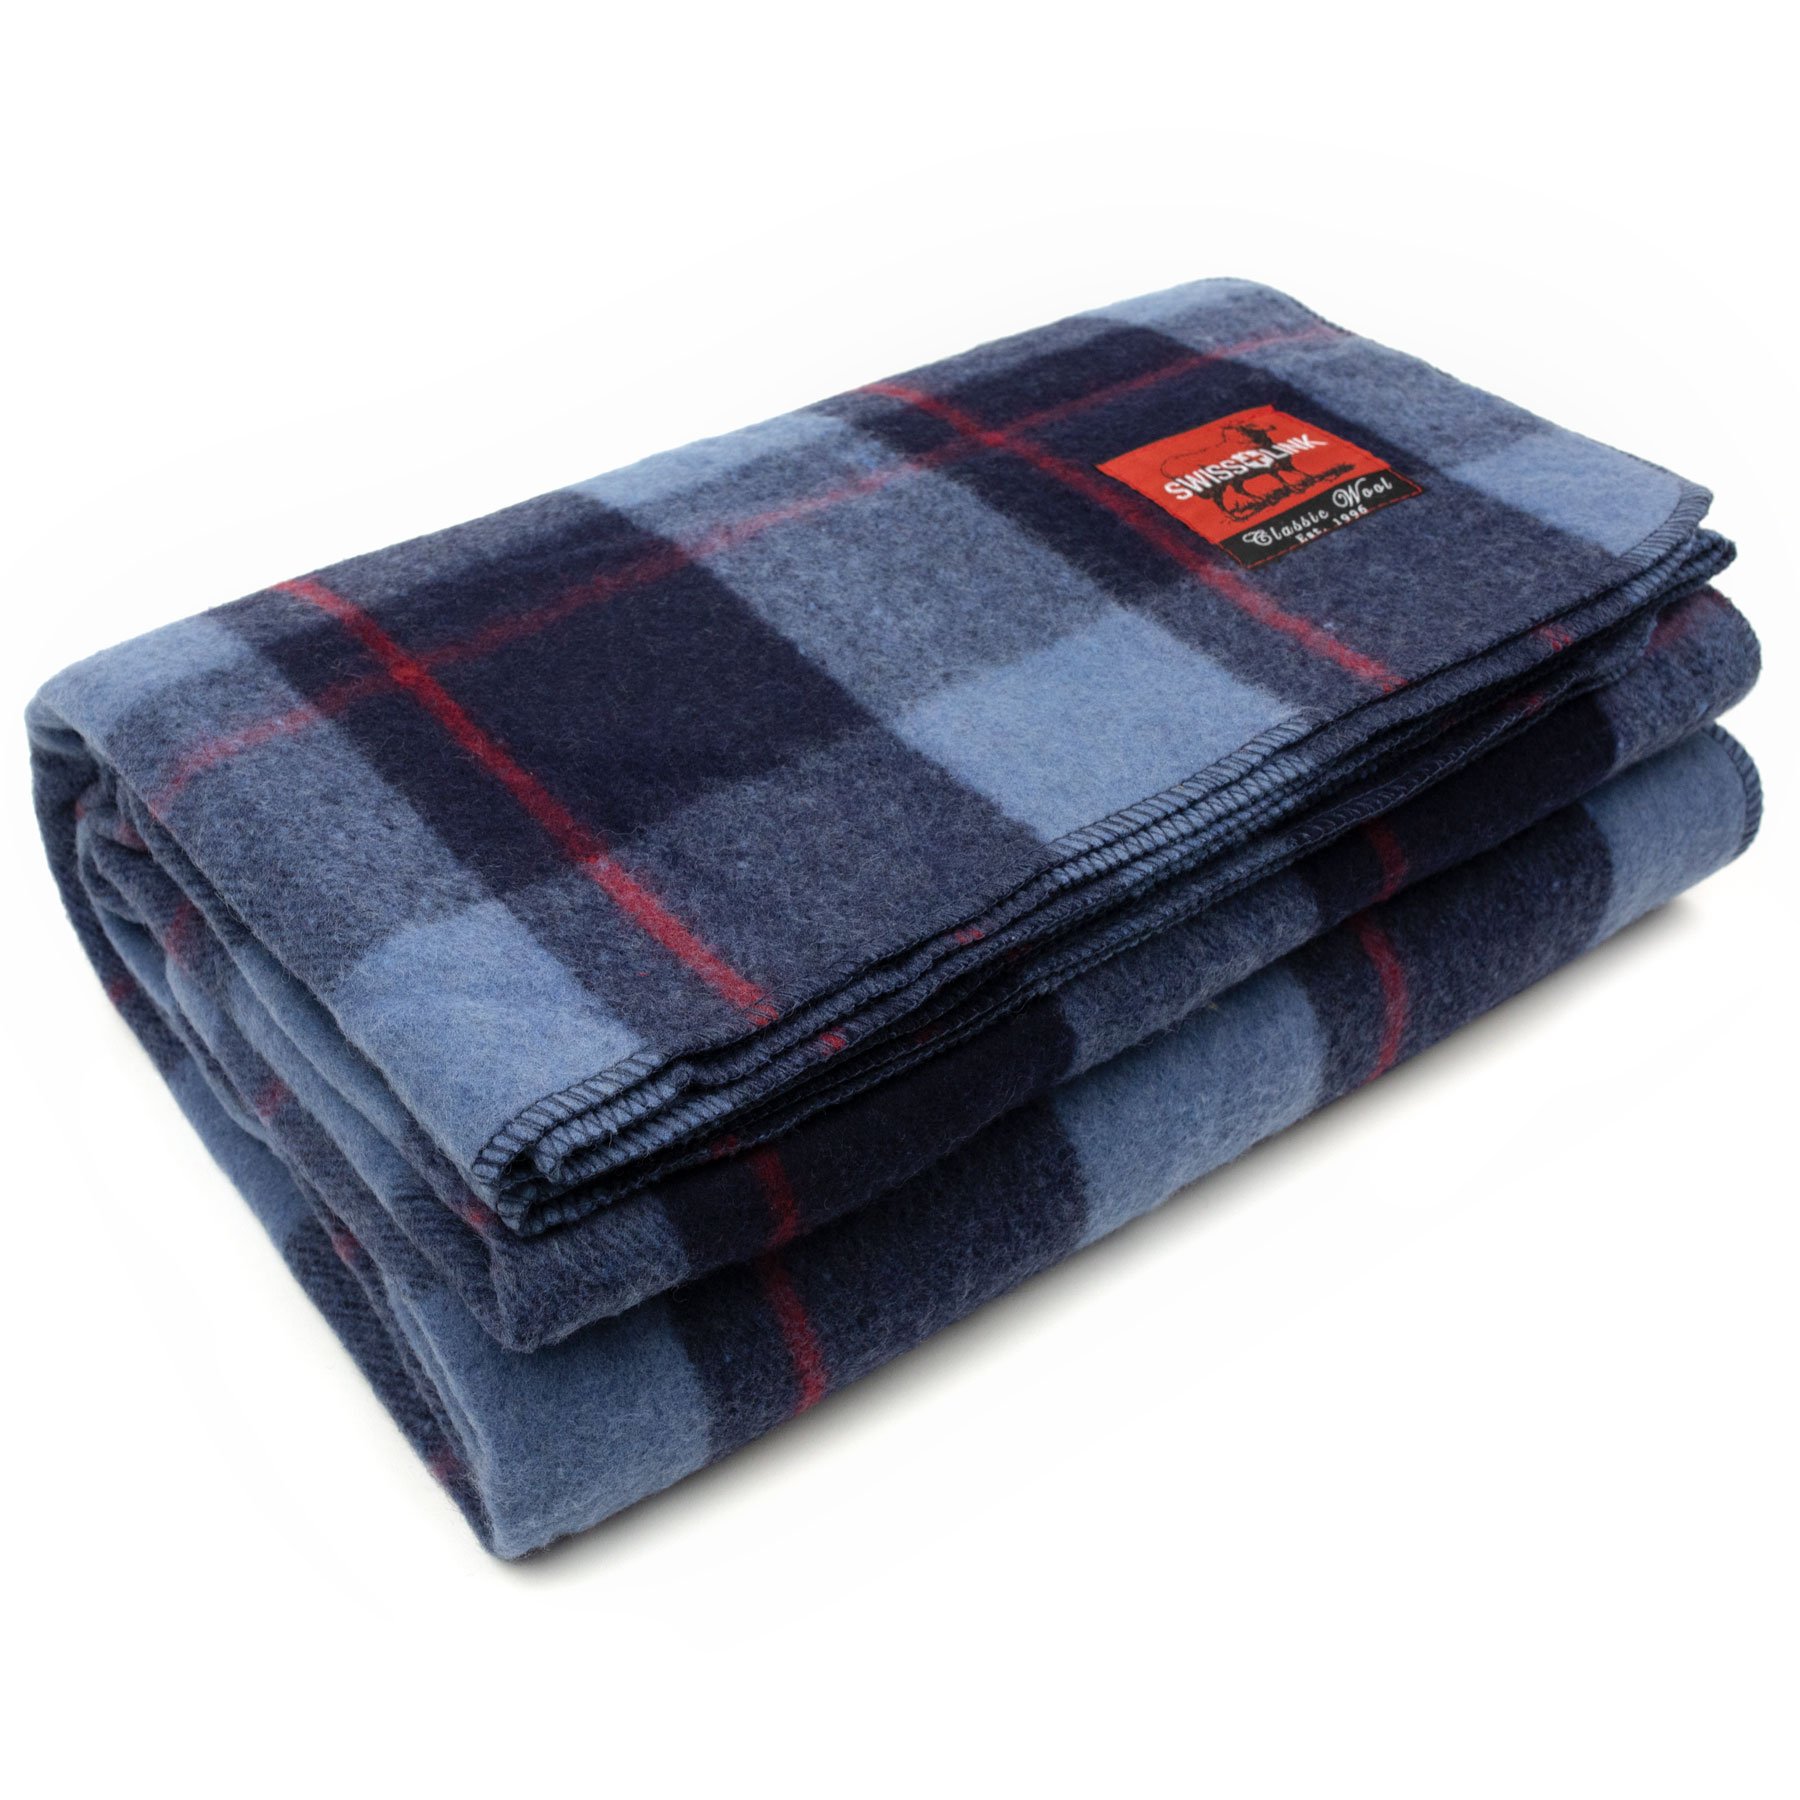 Swisslink Classic Wool Plaid Blanket - Five different Patterns 80% wool